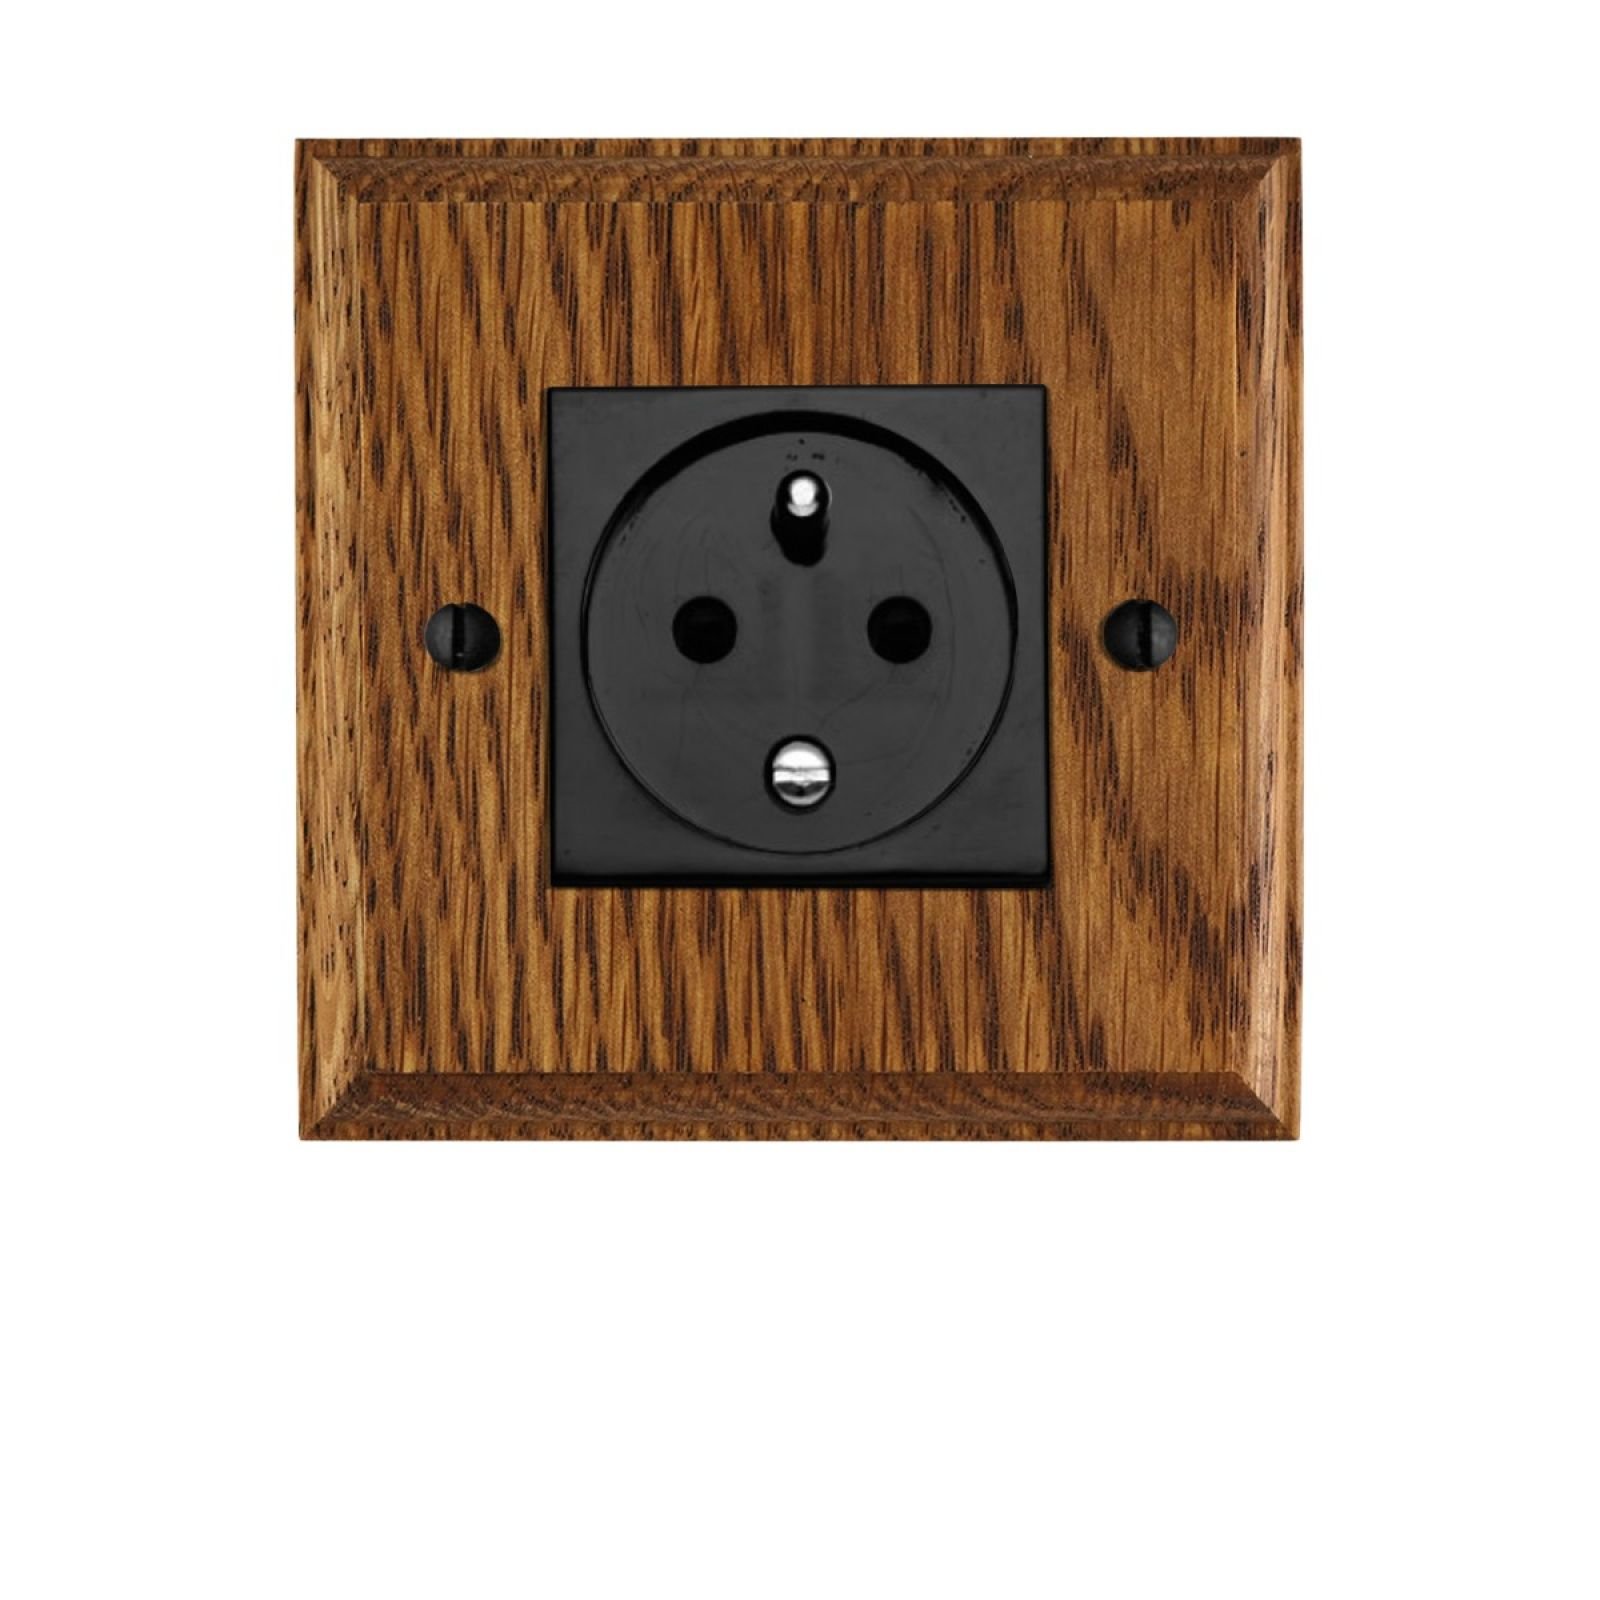 French single plug socket on wooden backplate